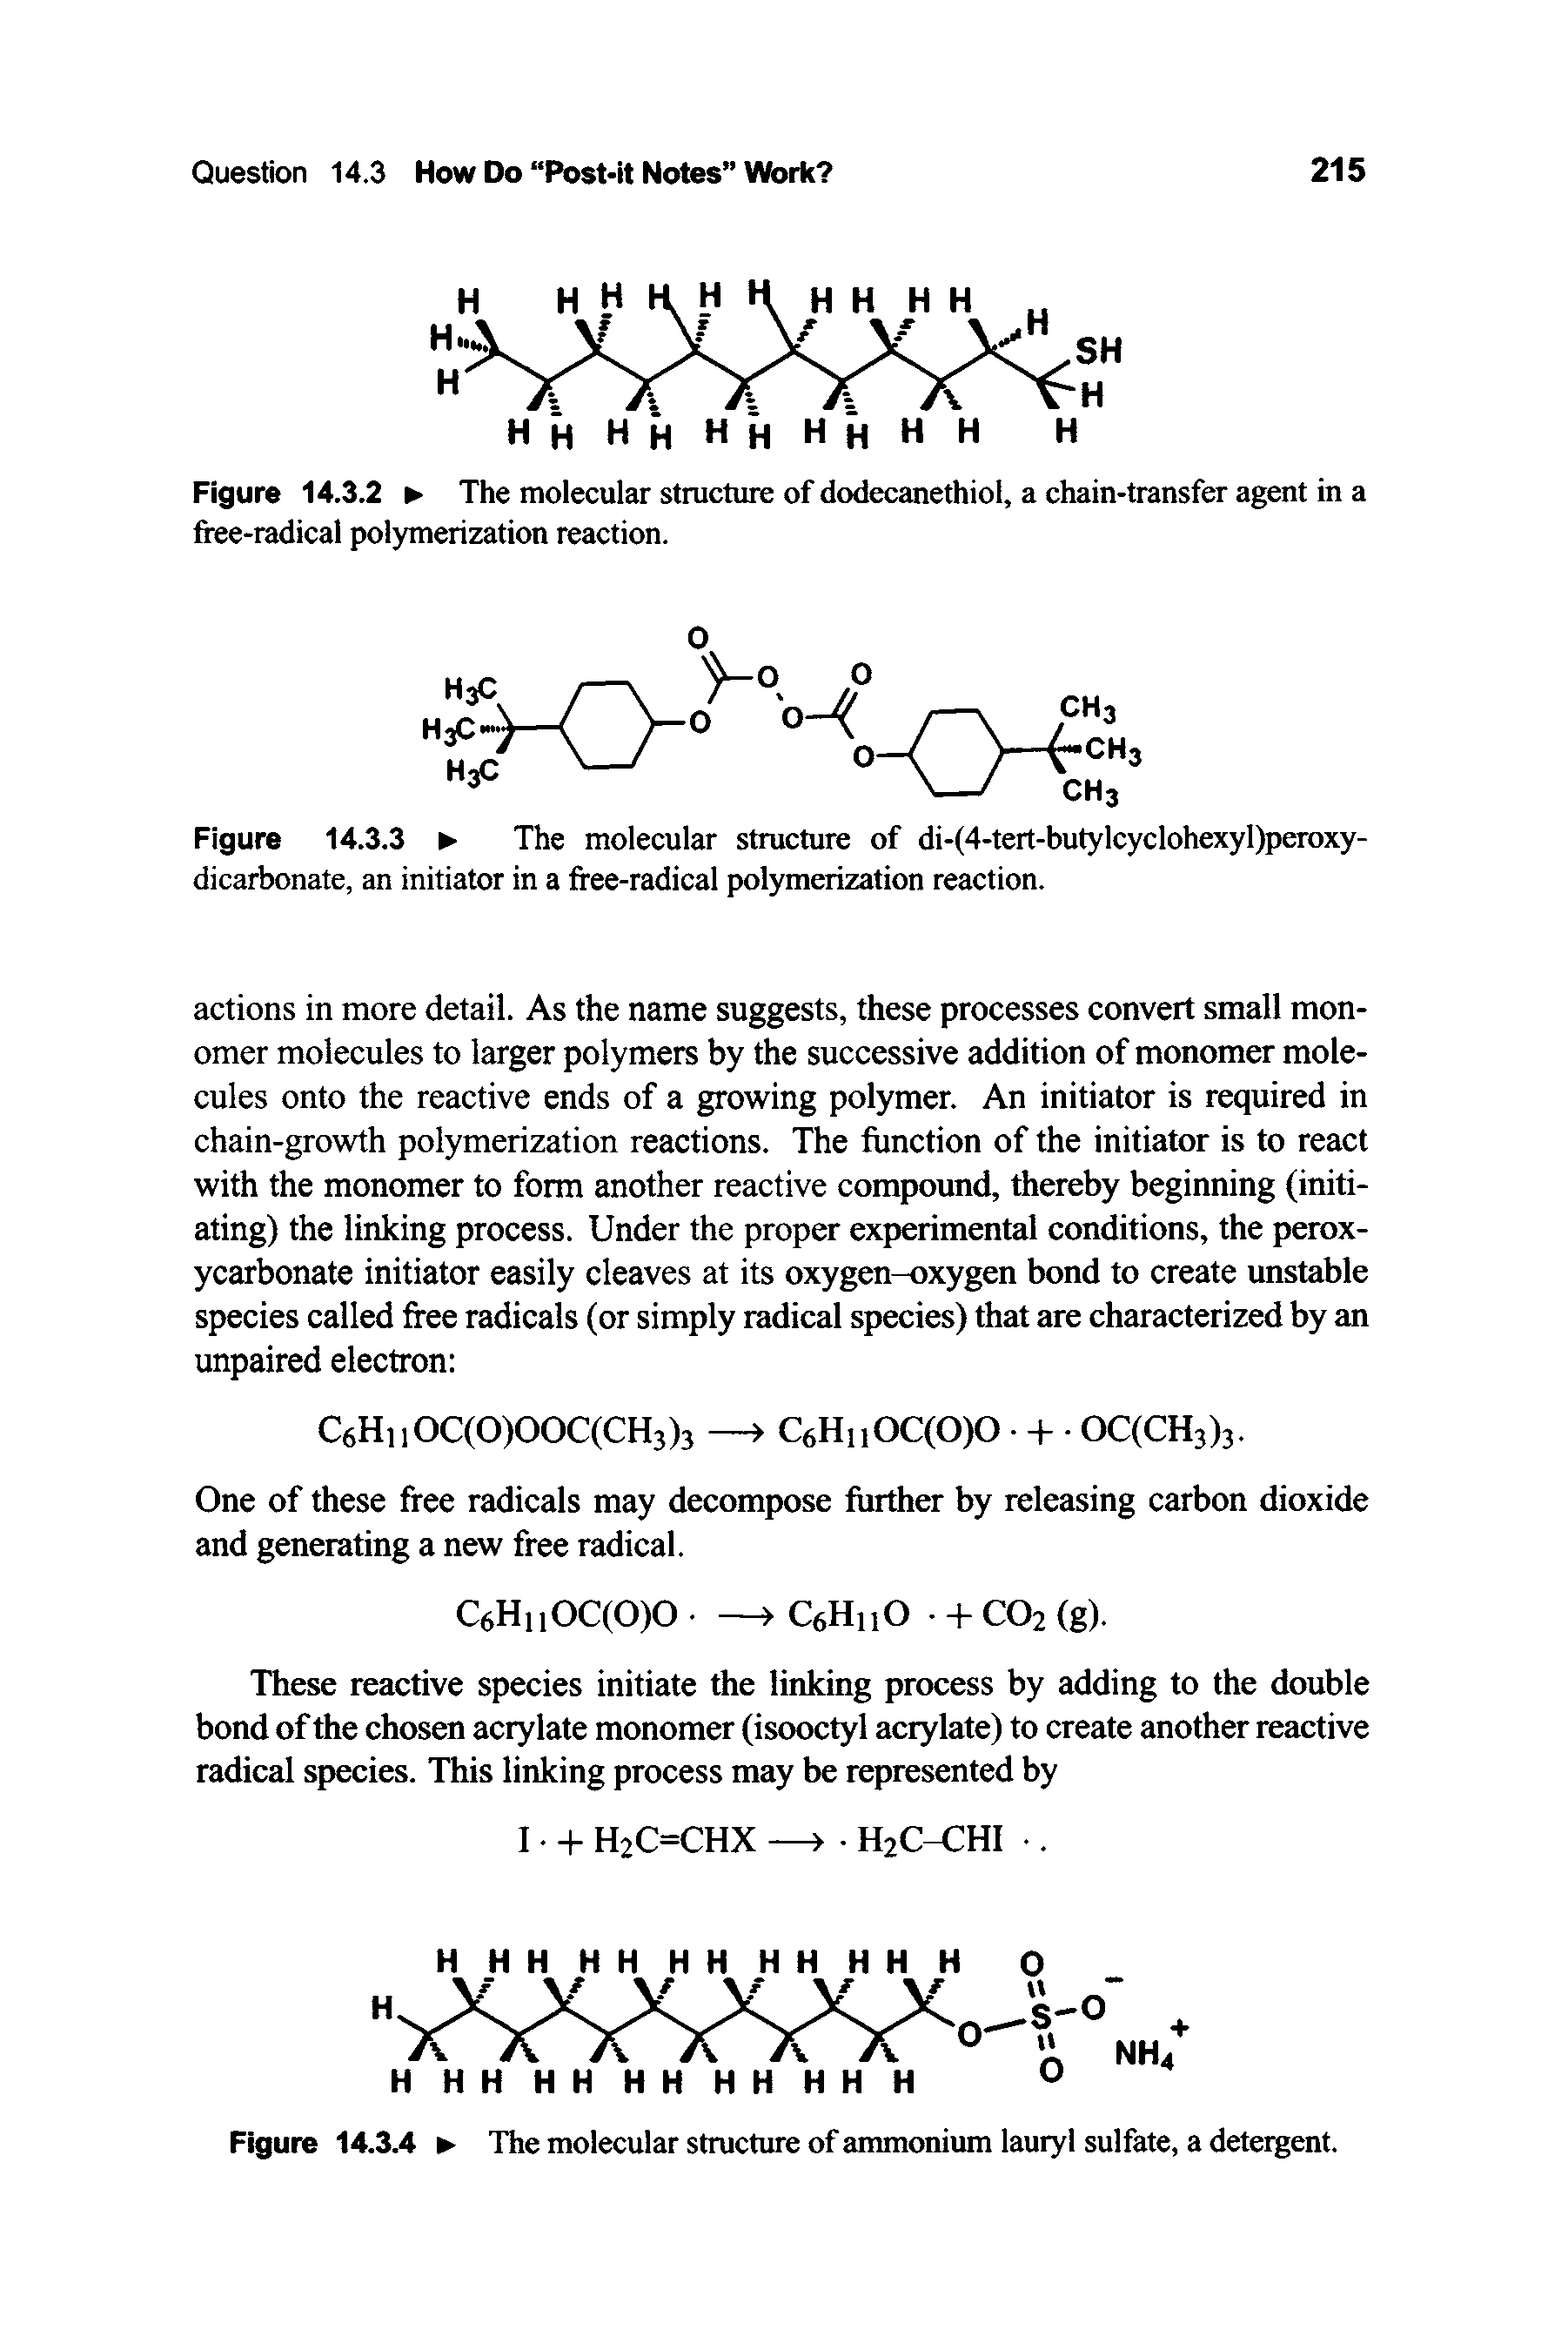 Figure 14.3.4 The molecular structure of ammonium lauryl sulfate, a detergent.